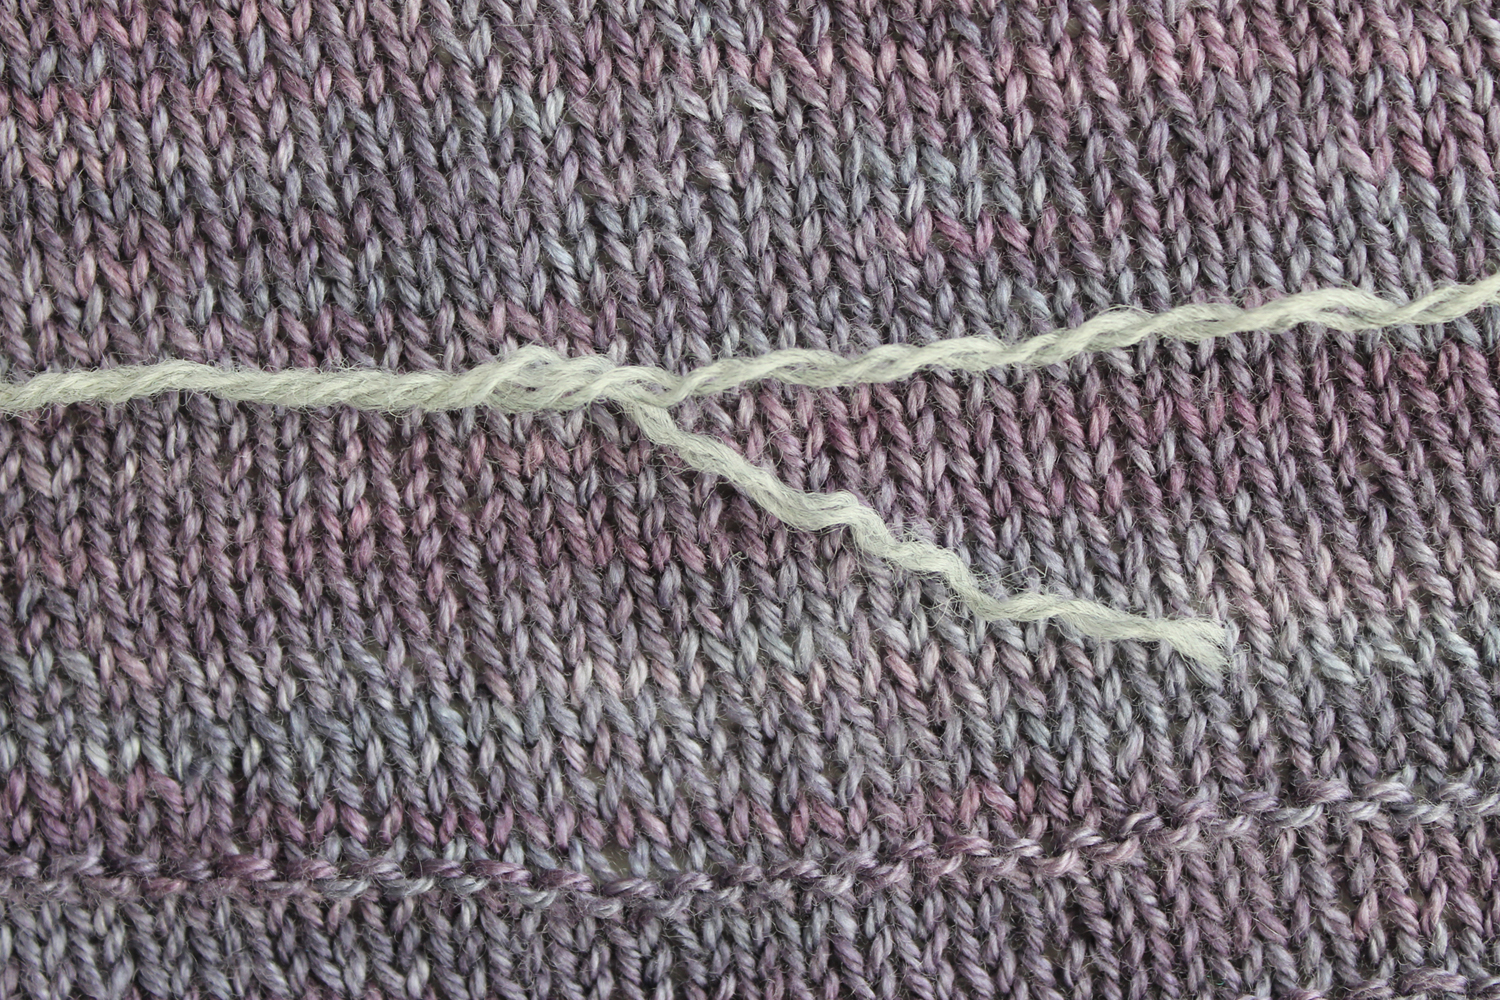 Splitting plies for yarn